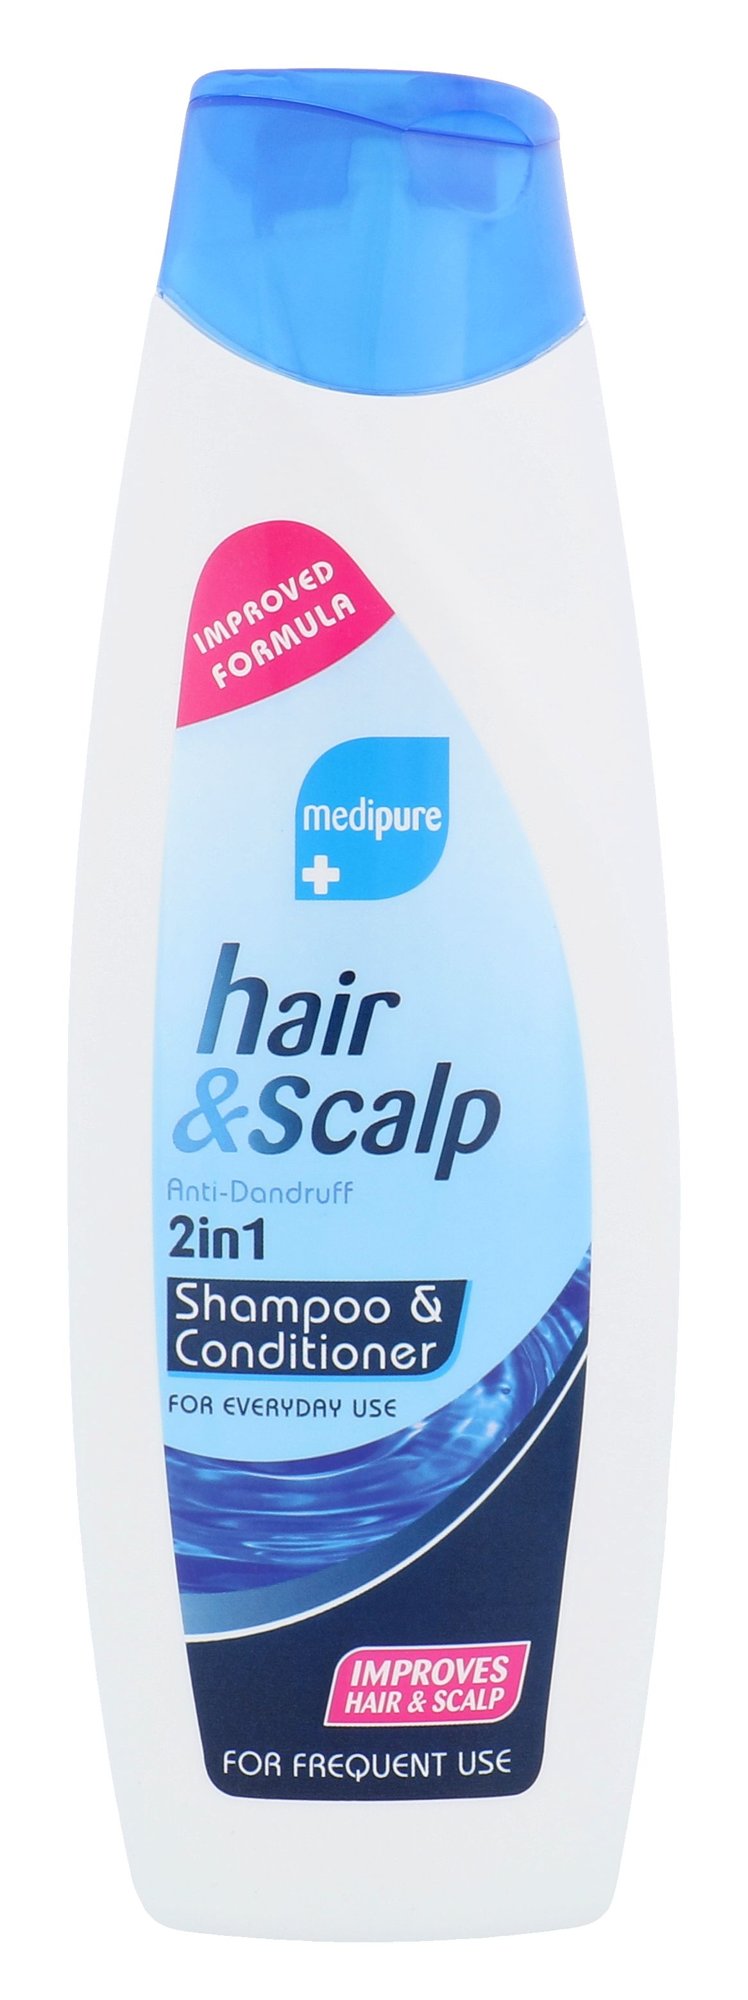 Xpel Medipure Hair & Scalp Anti-Dandruff Shampoo 2in1